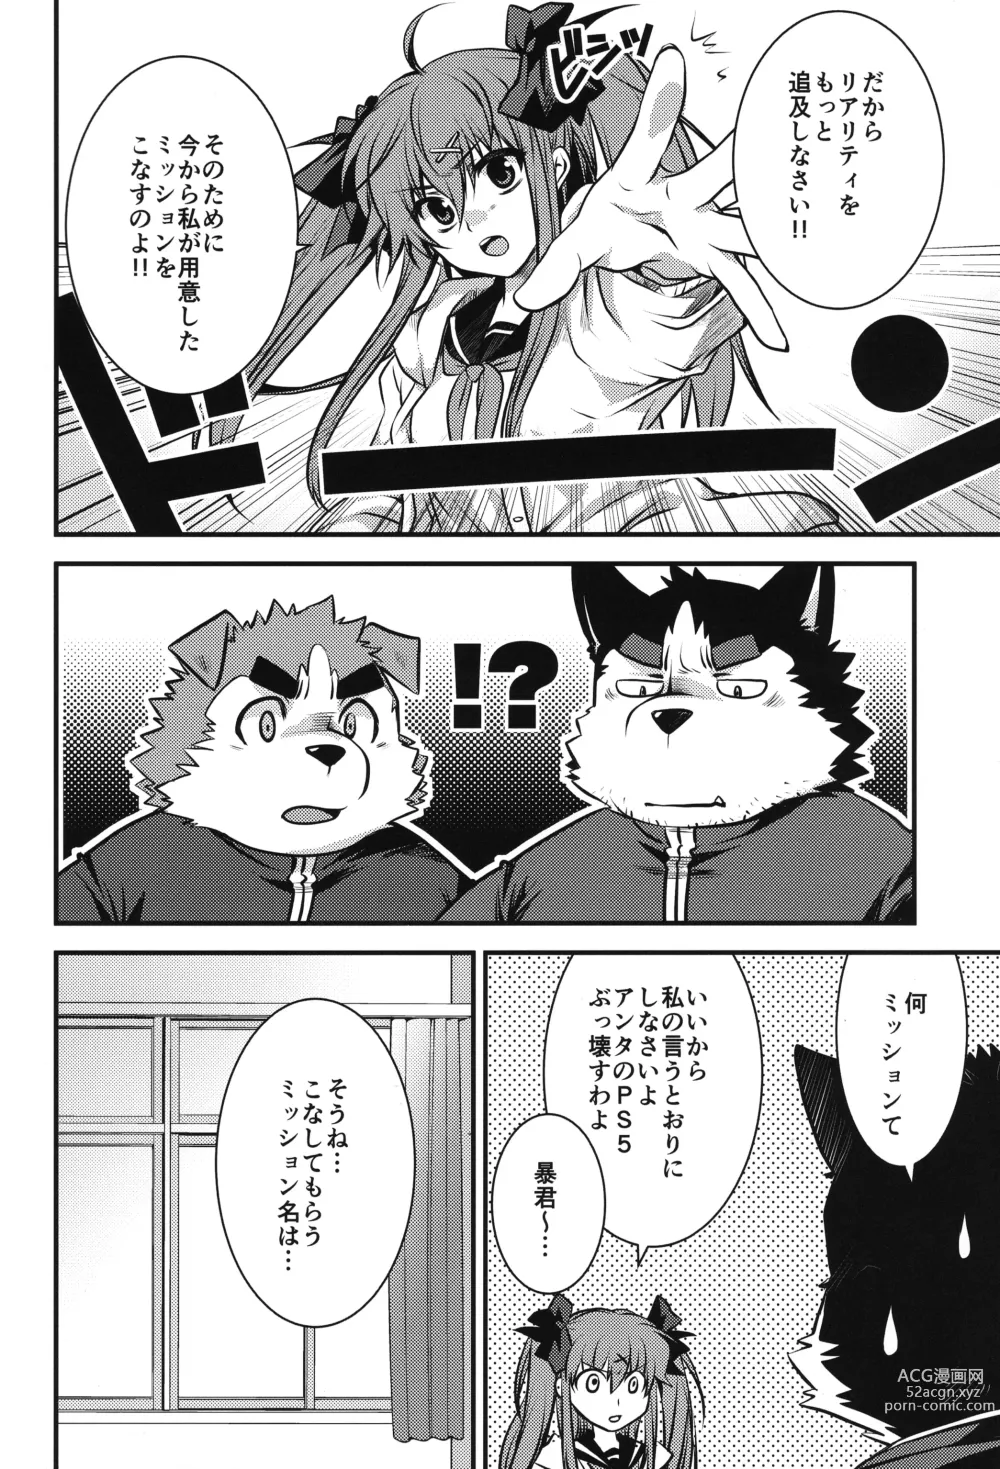 Page 8 of doujinshi Eccentric Shintai Kensa